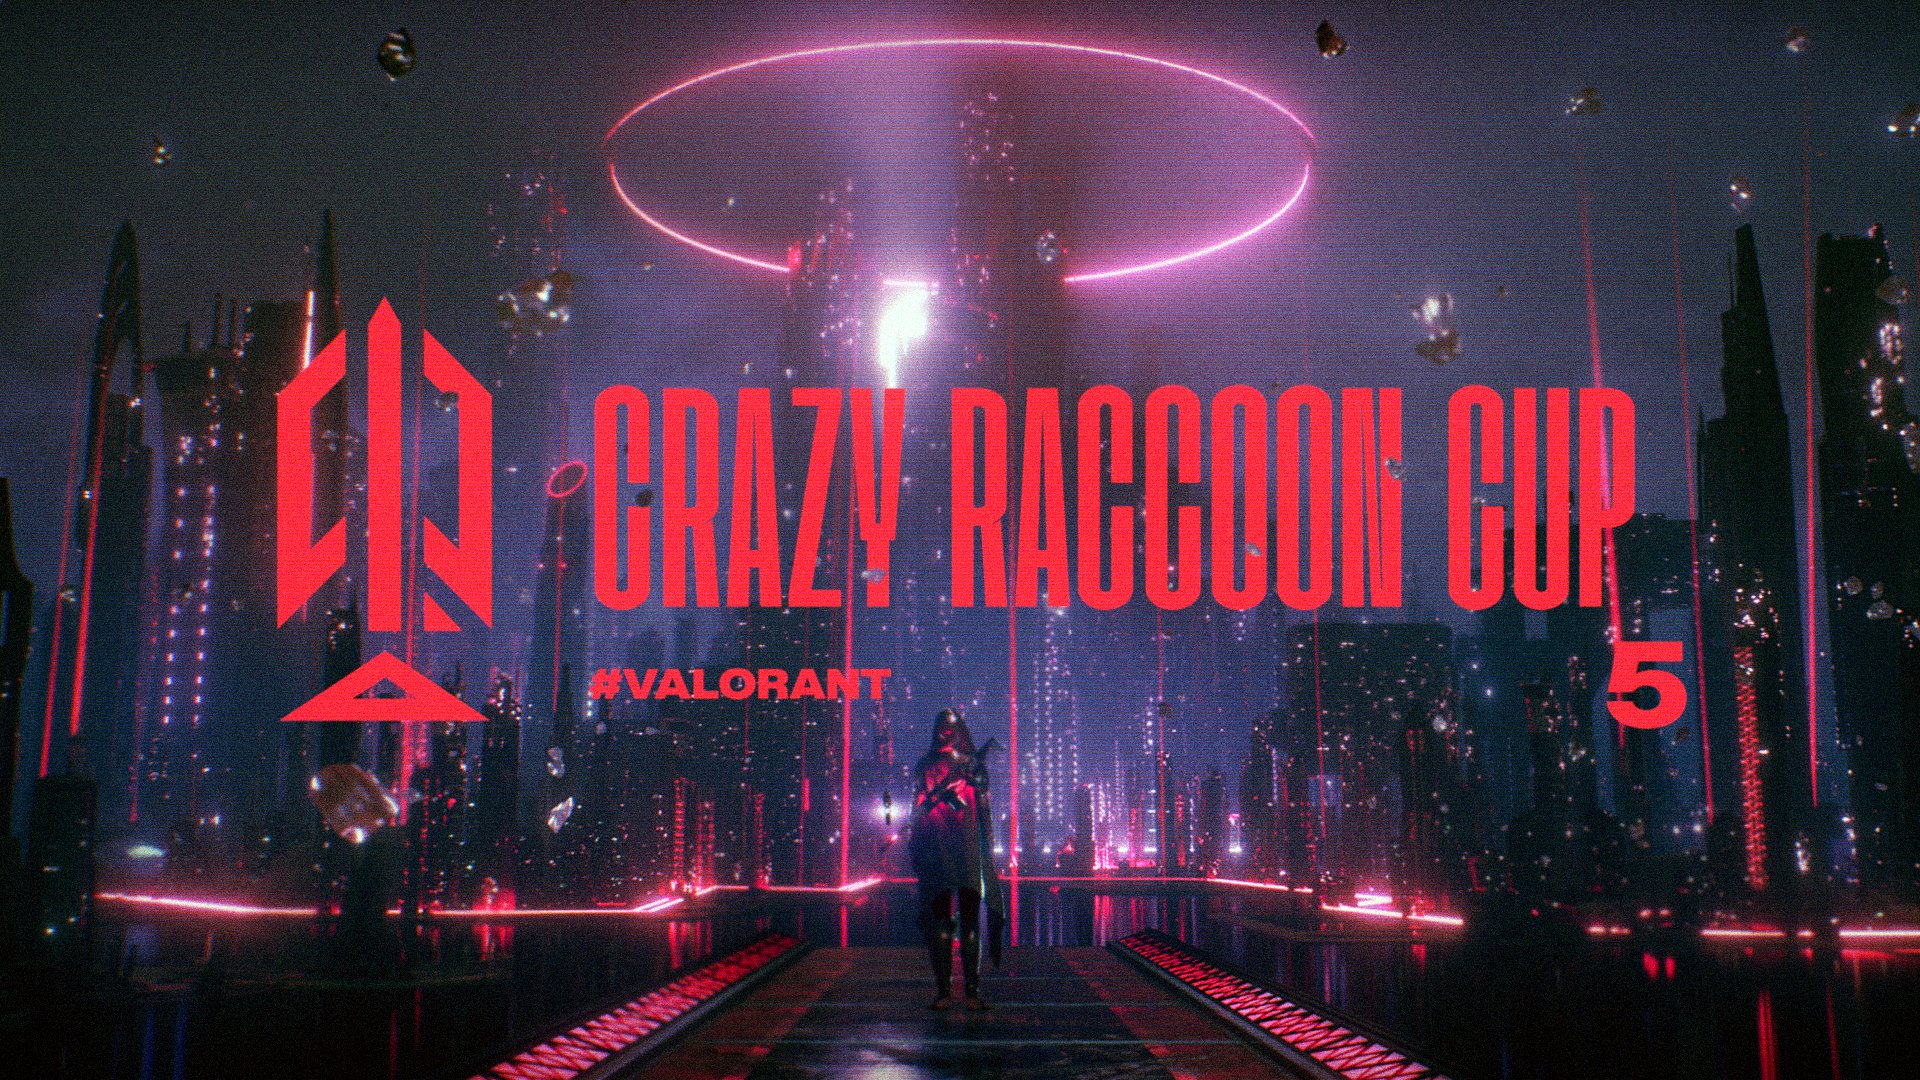 出演情報 – Clutch_Fiが『第5回 Crazy Raccoon VALORANT』に出演